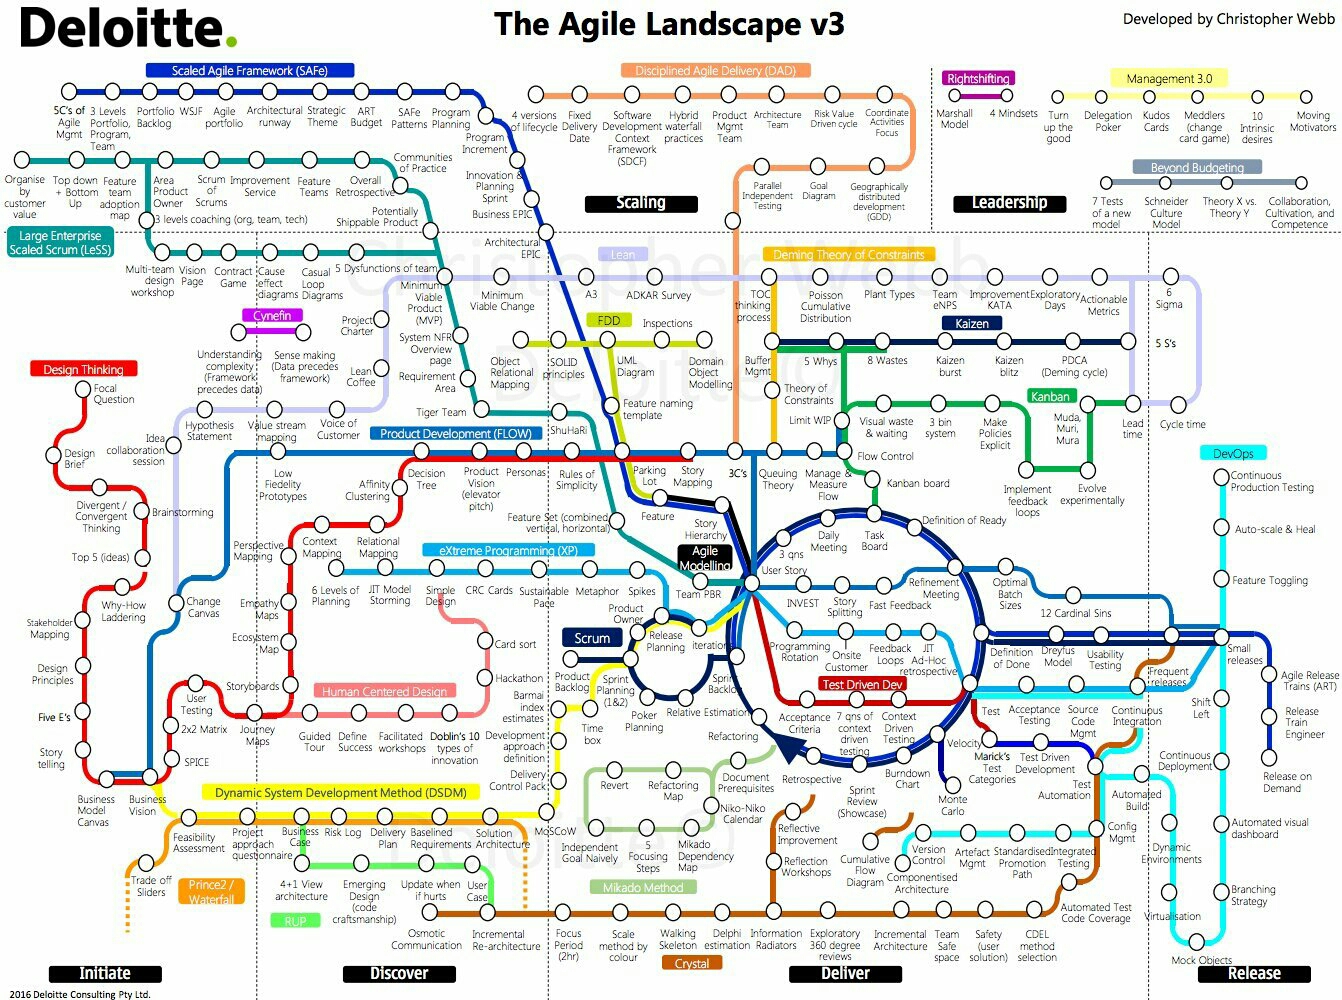 deloitte-agile-landscape